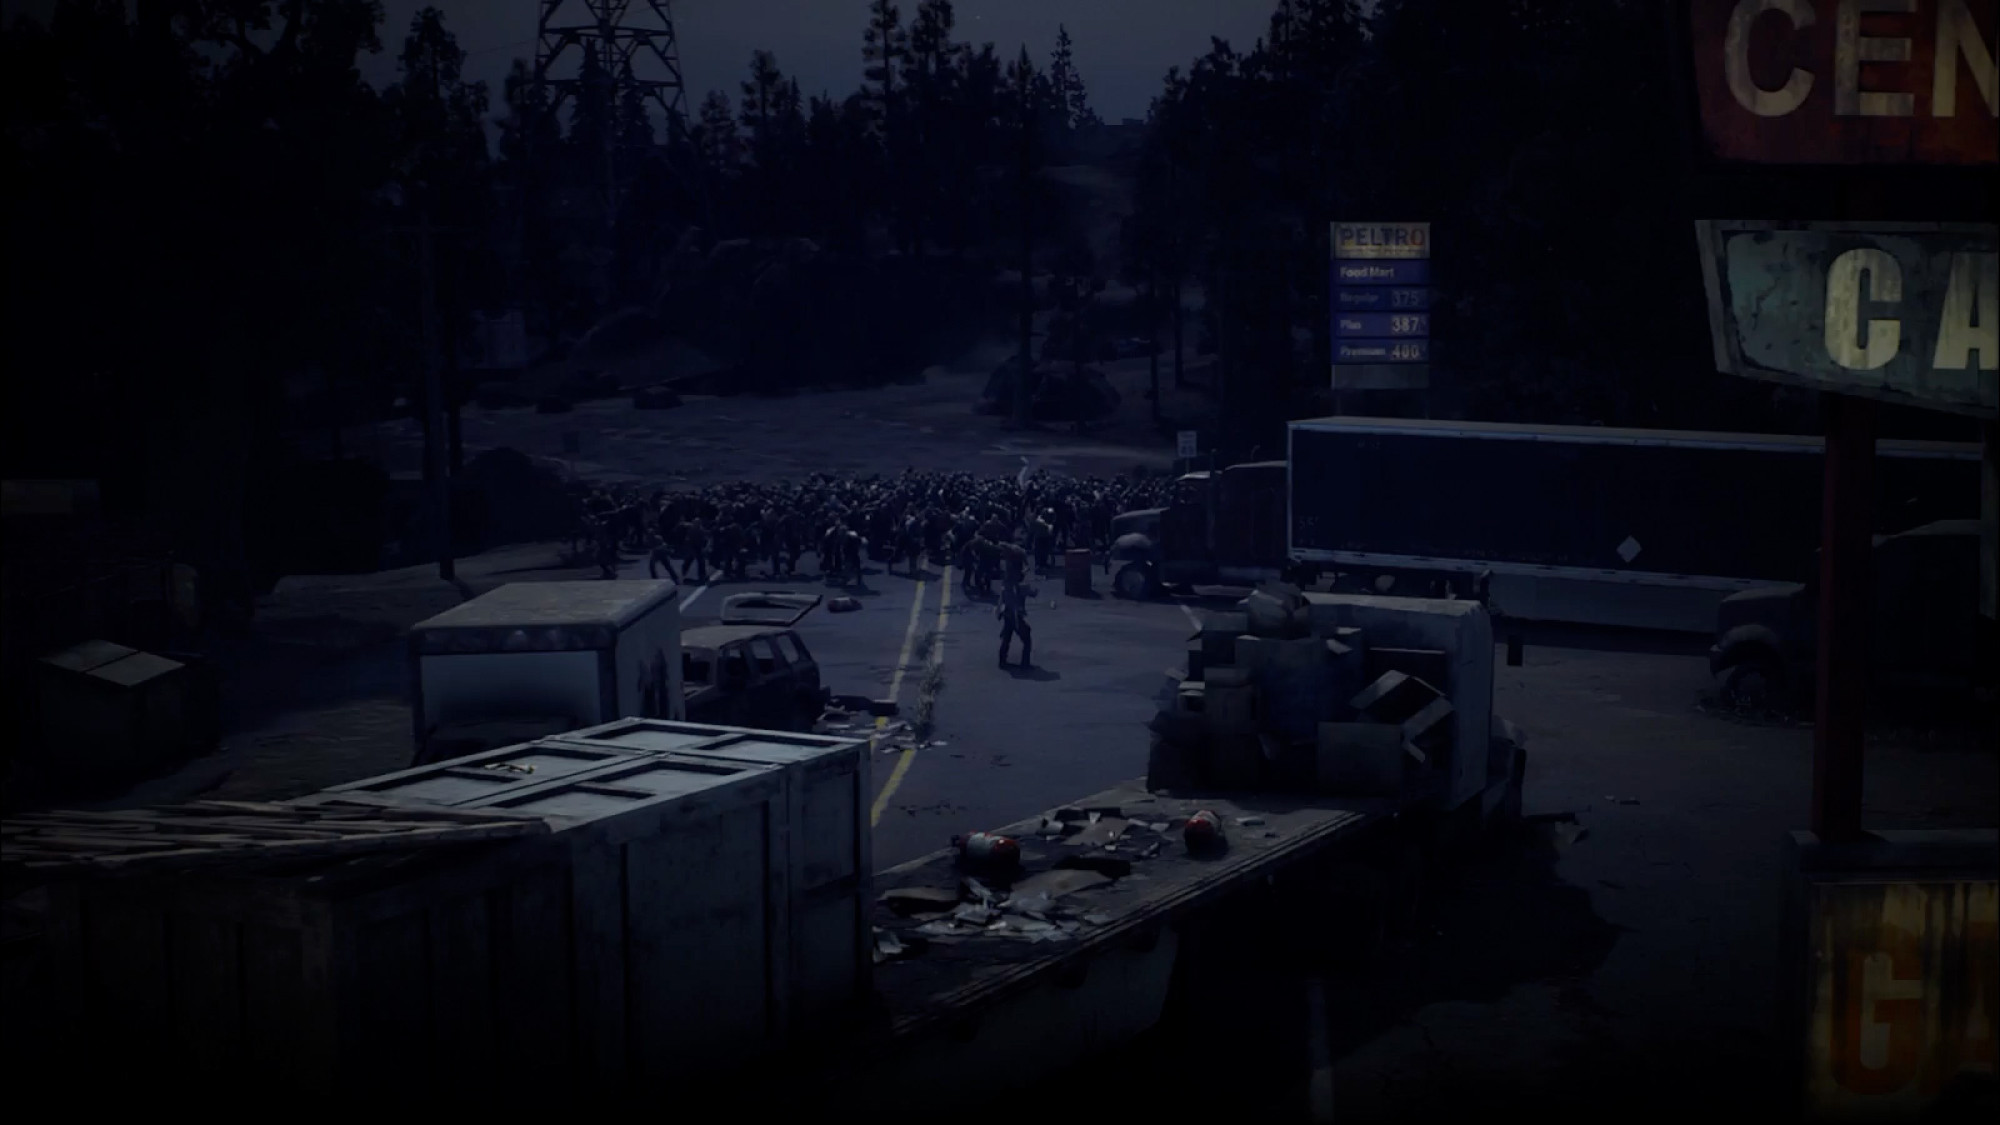 Days Gone: Inside the New Story Trailer – PlayStation.Blog